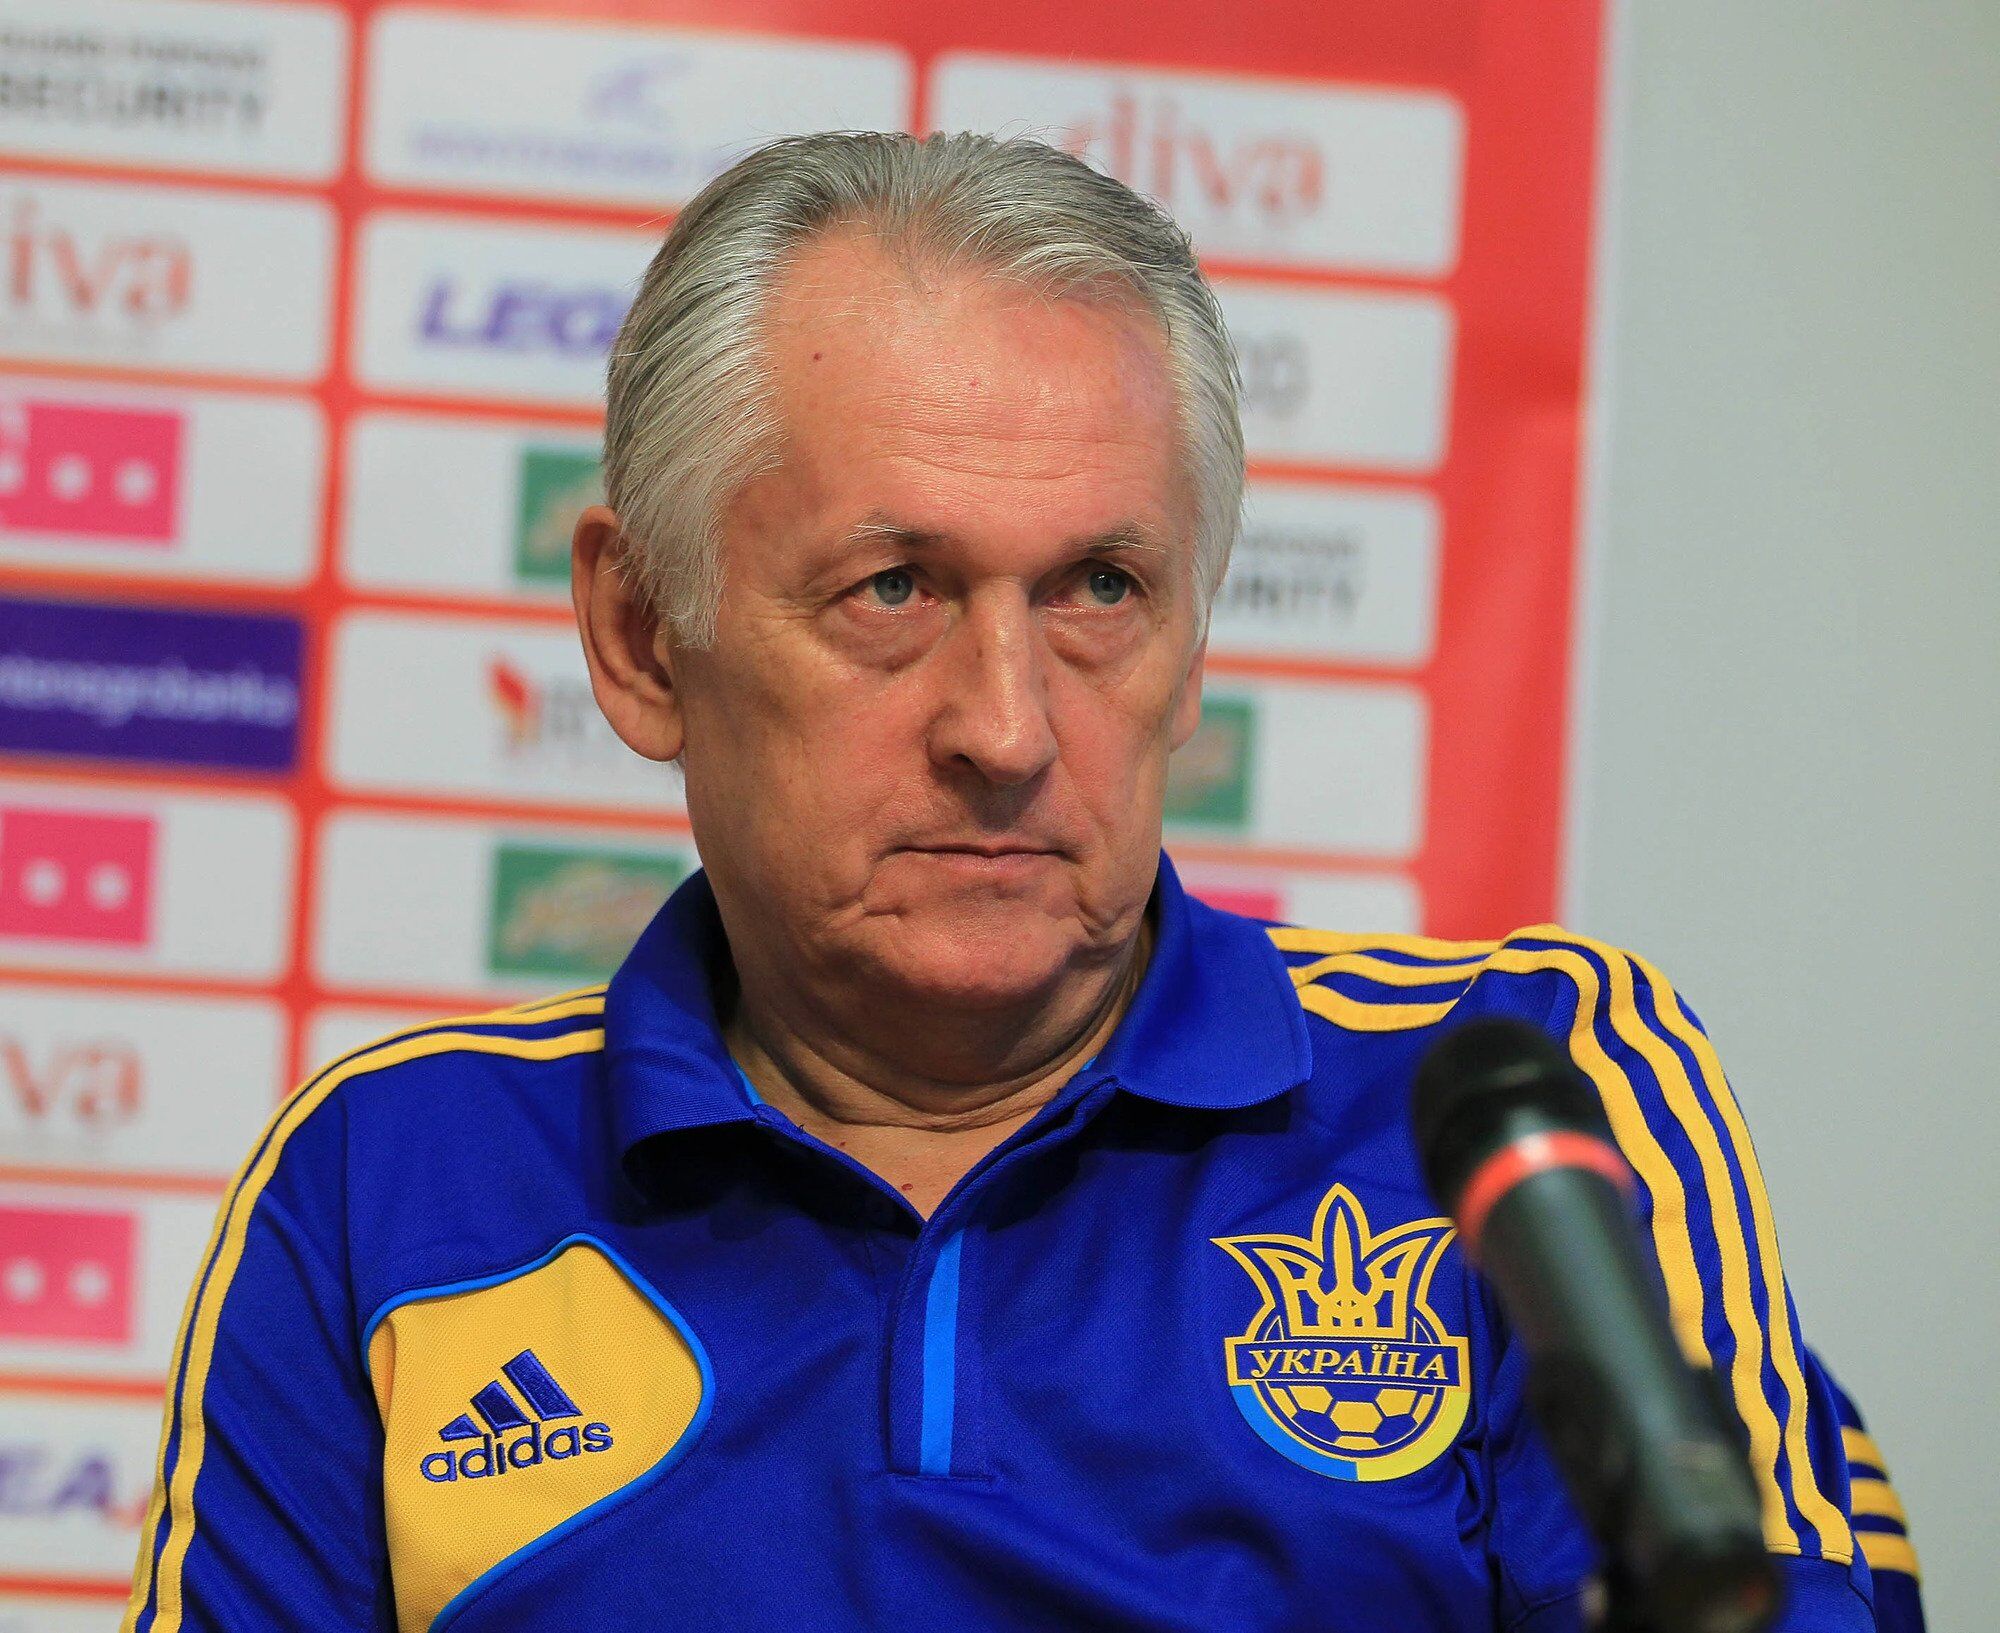 Mykhailo Fomenko, the legendary Dynamo football player and former coach of the Ukrainian national team, has died